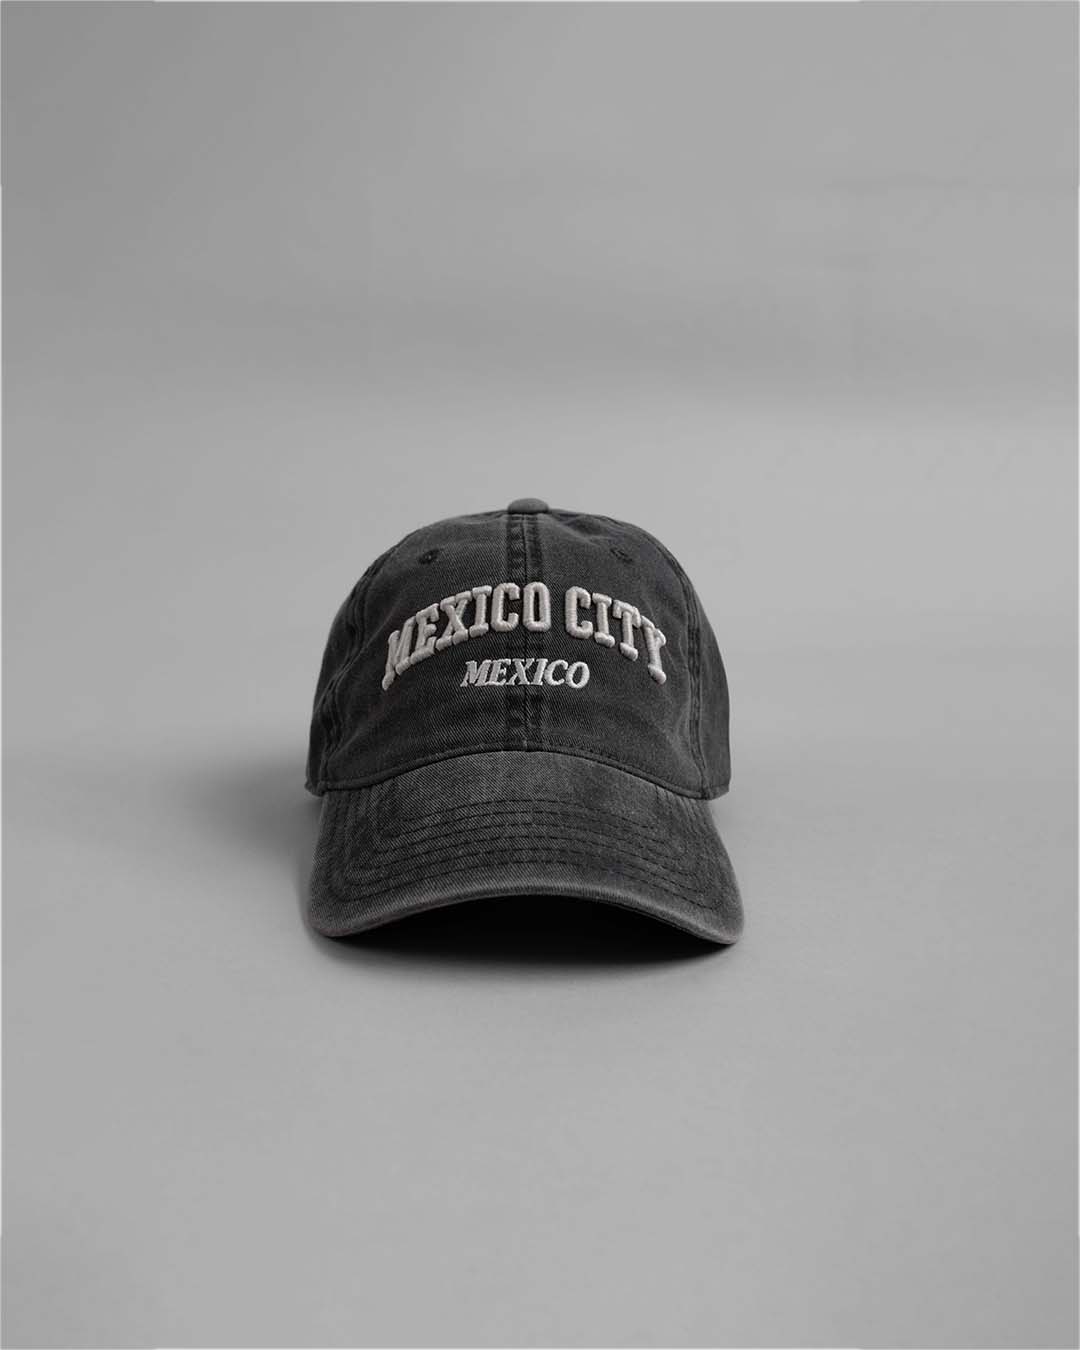 Mexico City - Cap